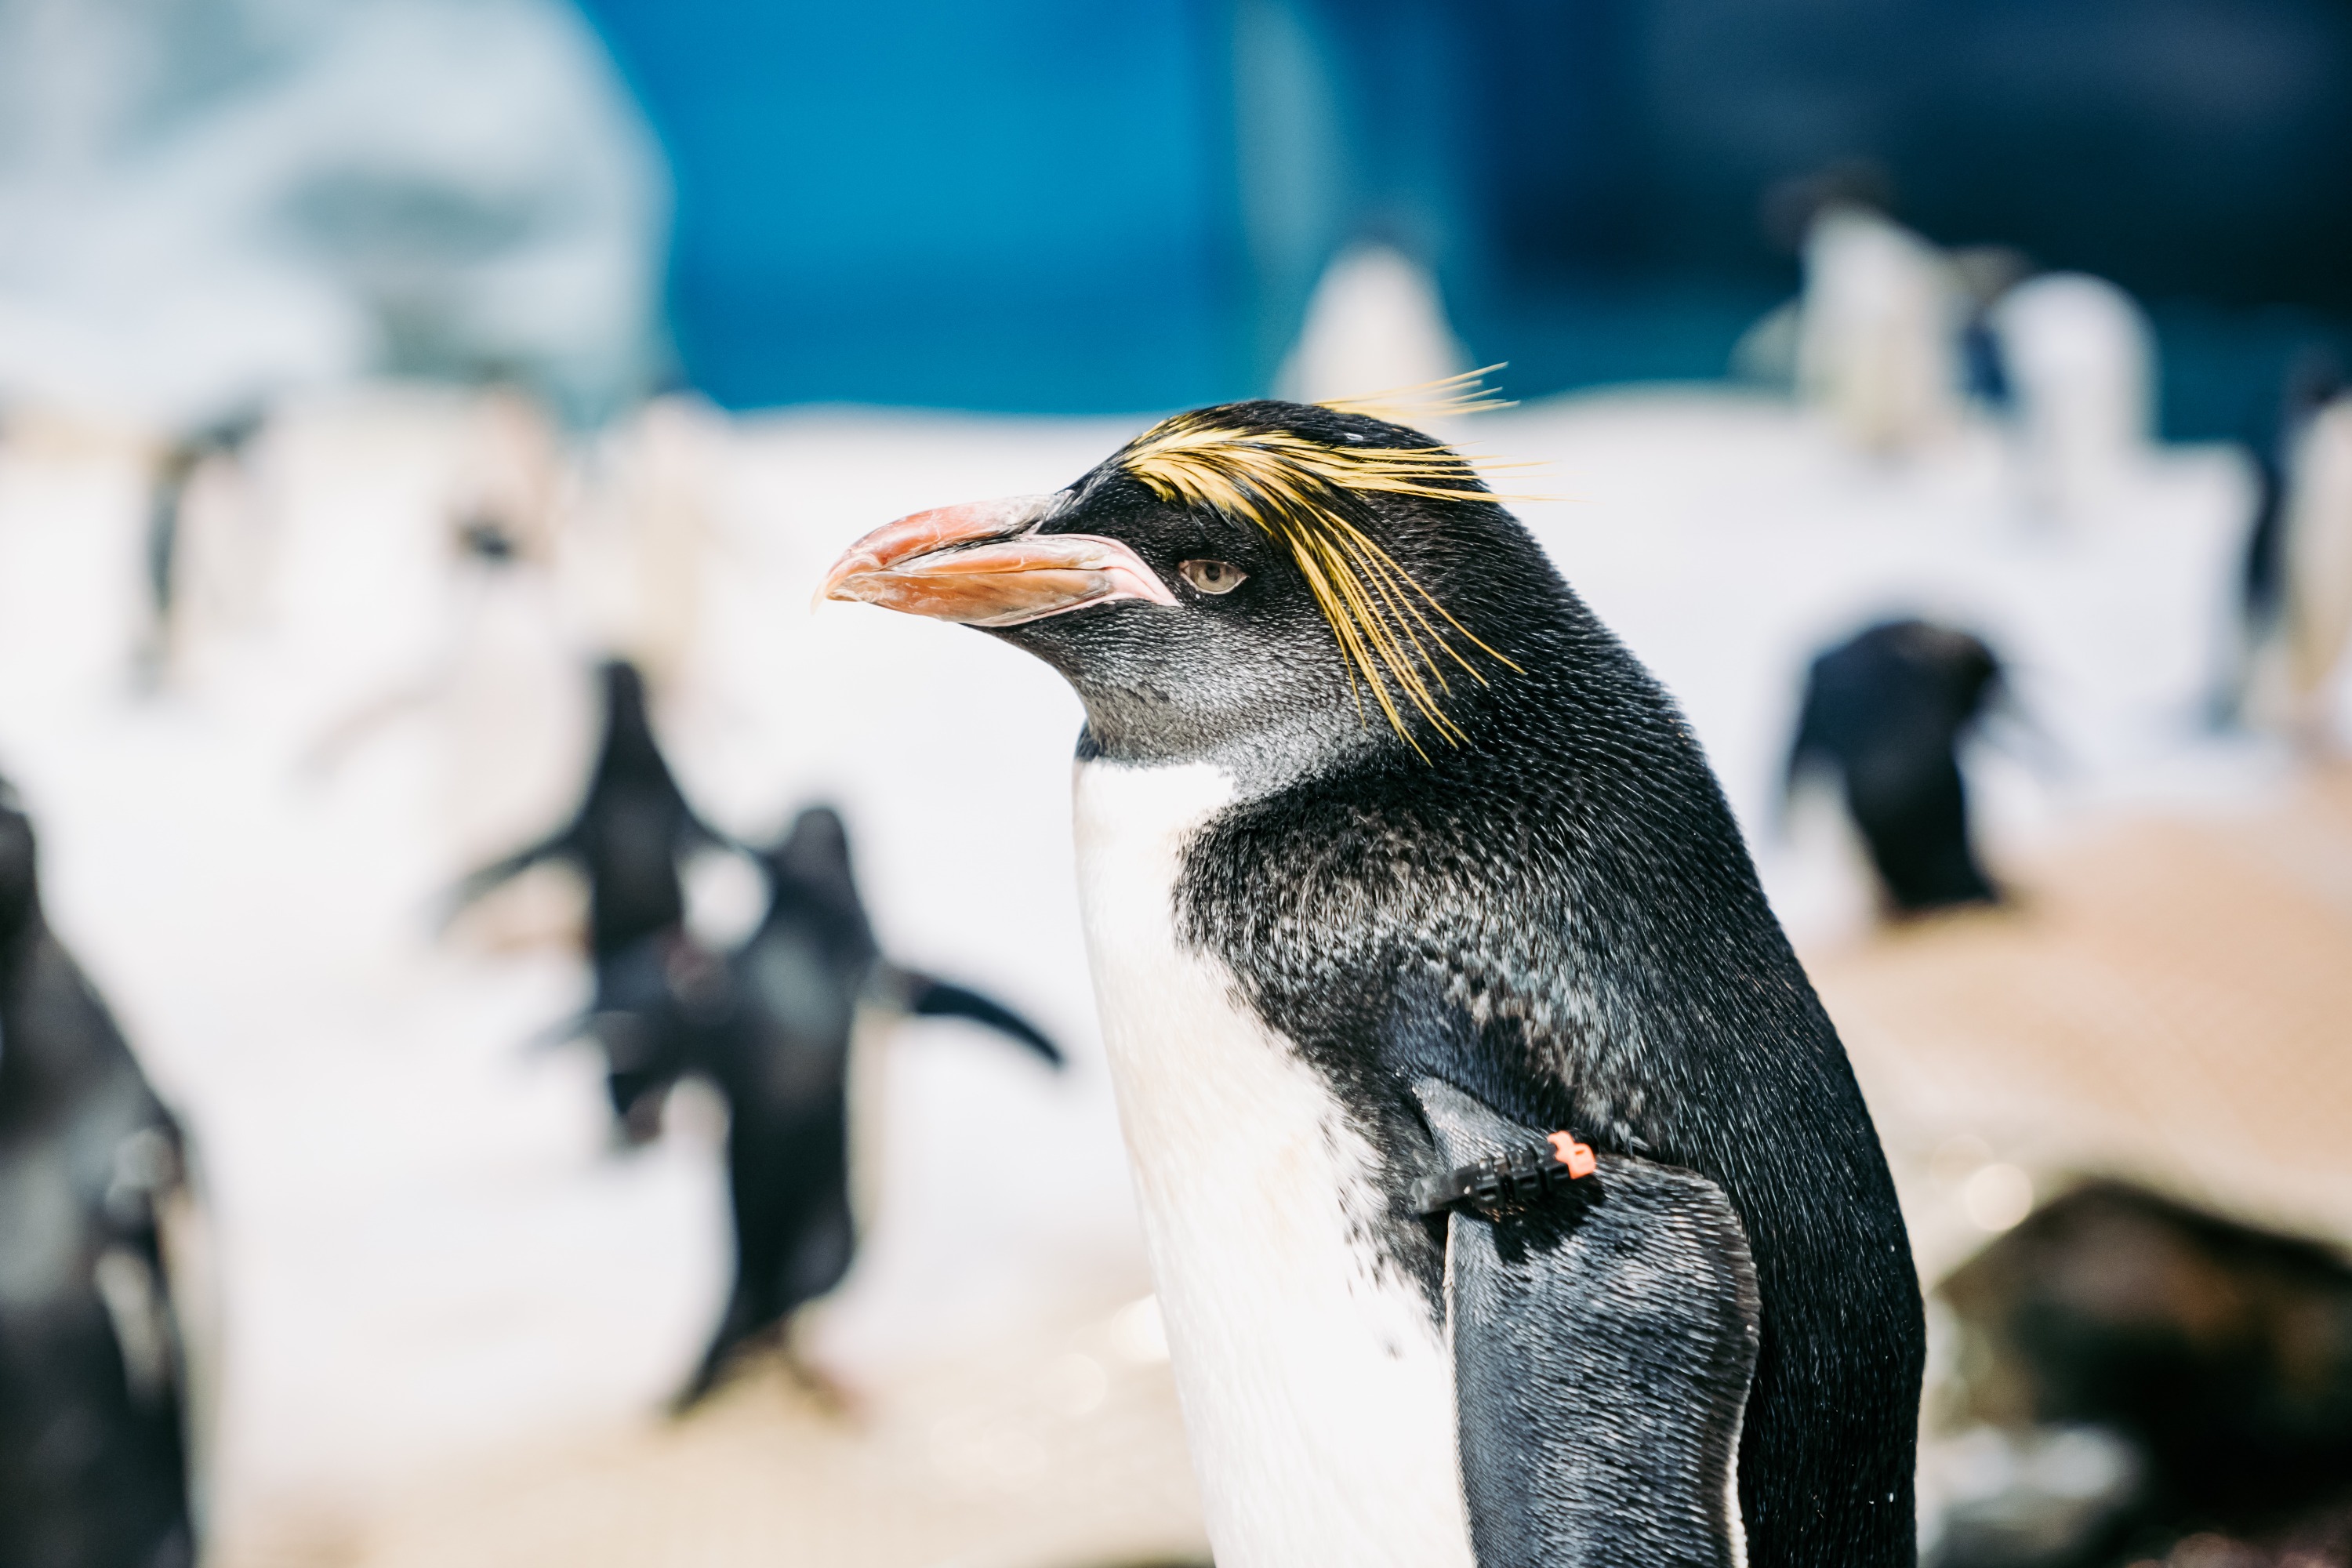 Penguin Encounter at National Museum of Marine Biology & Aquarium